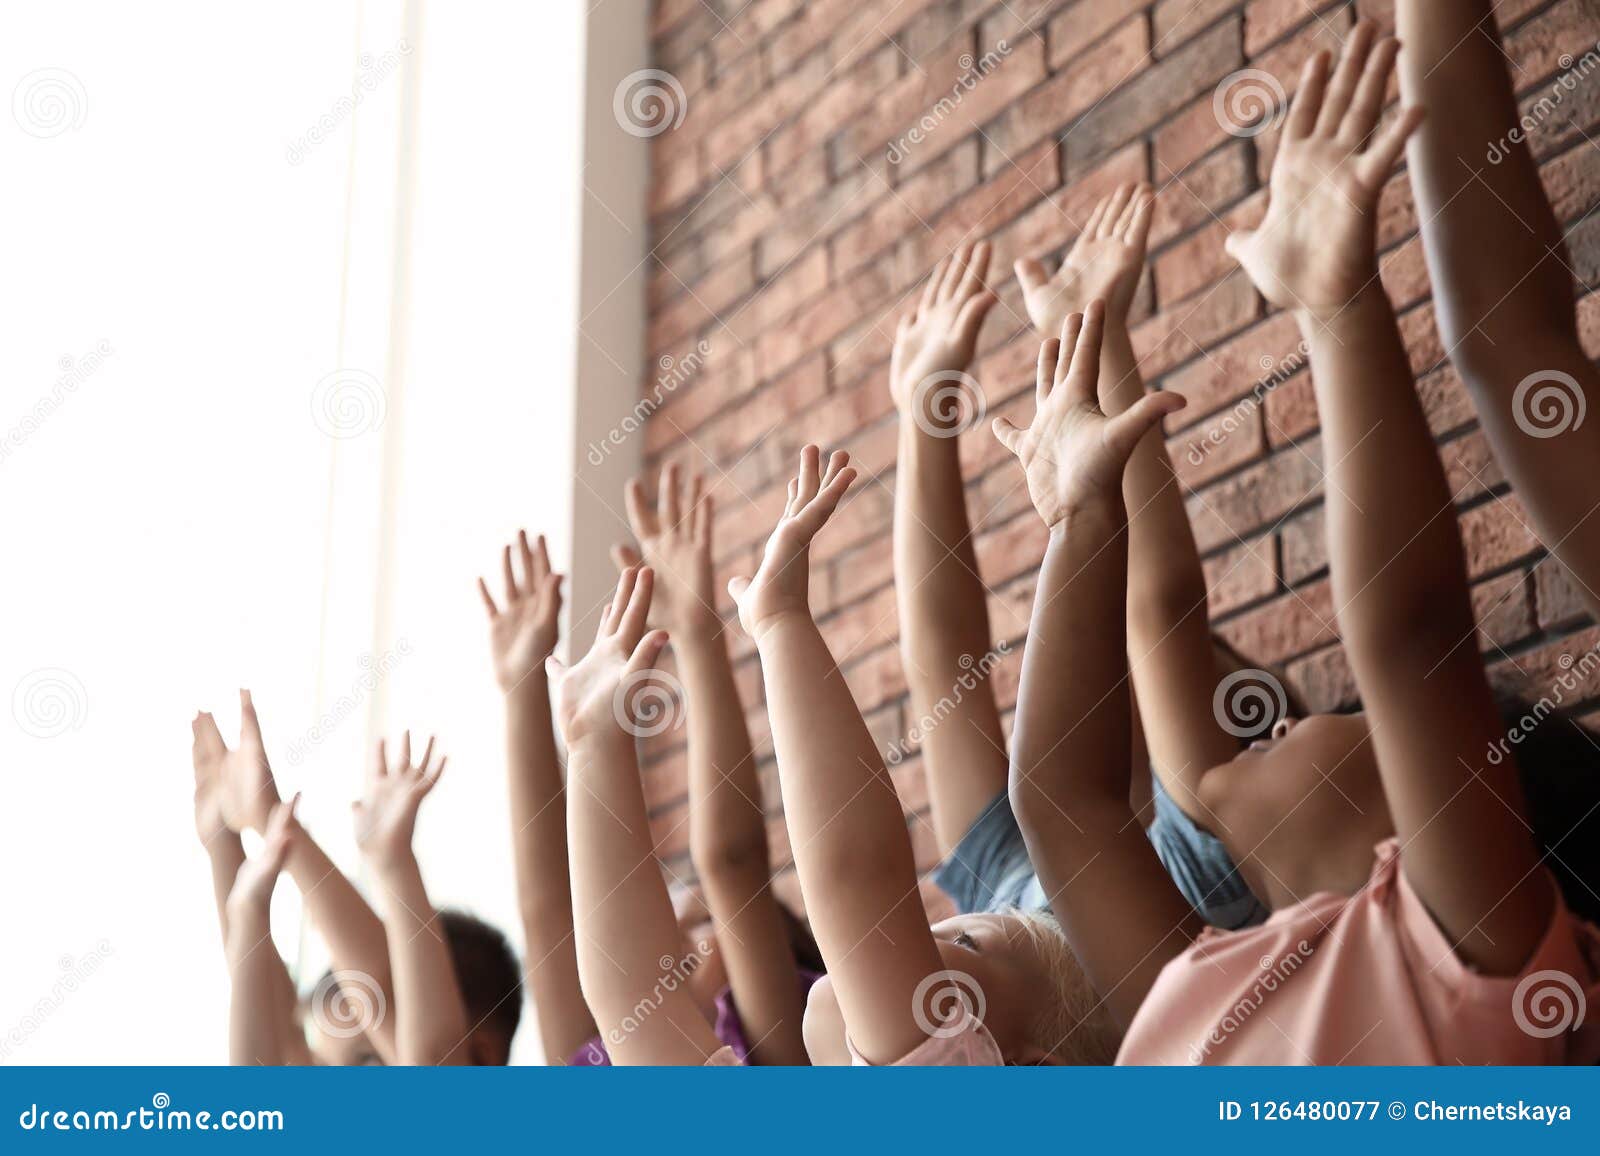 little children raising hands together indoors